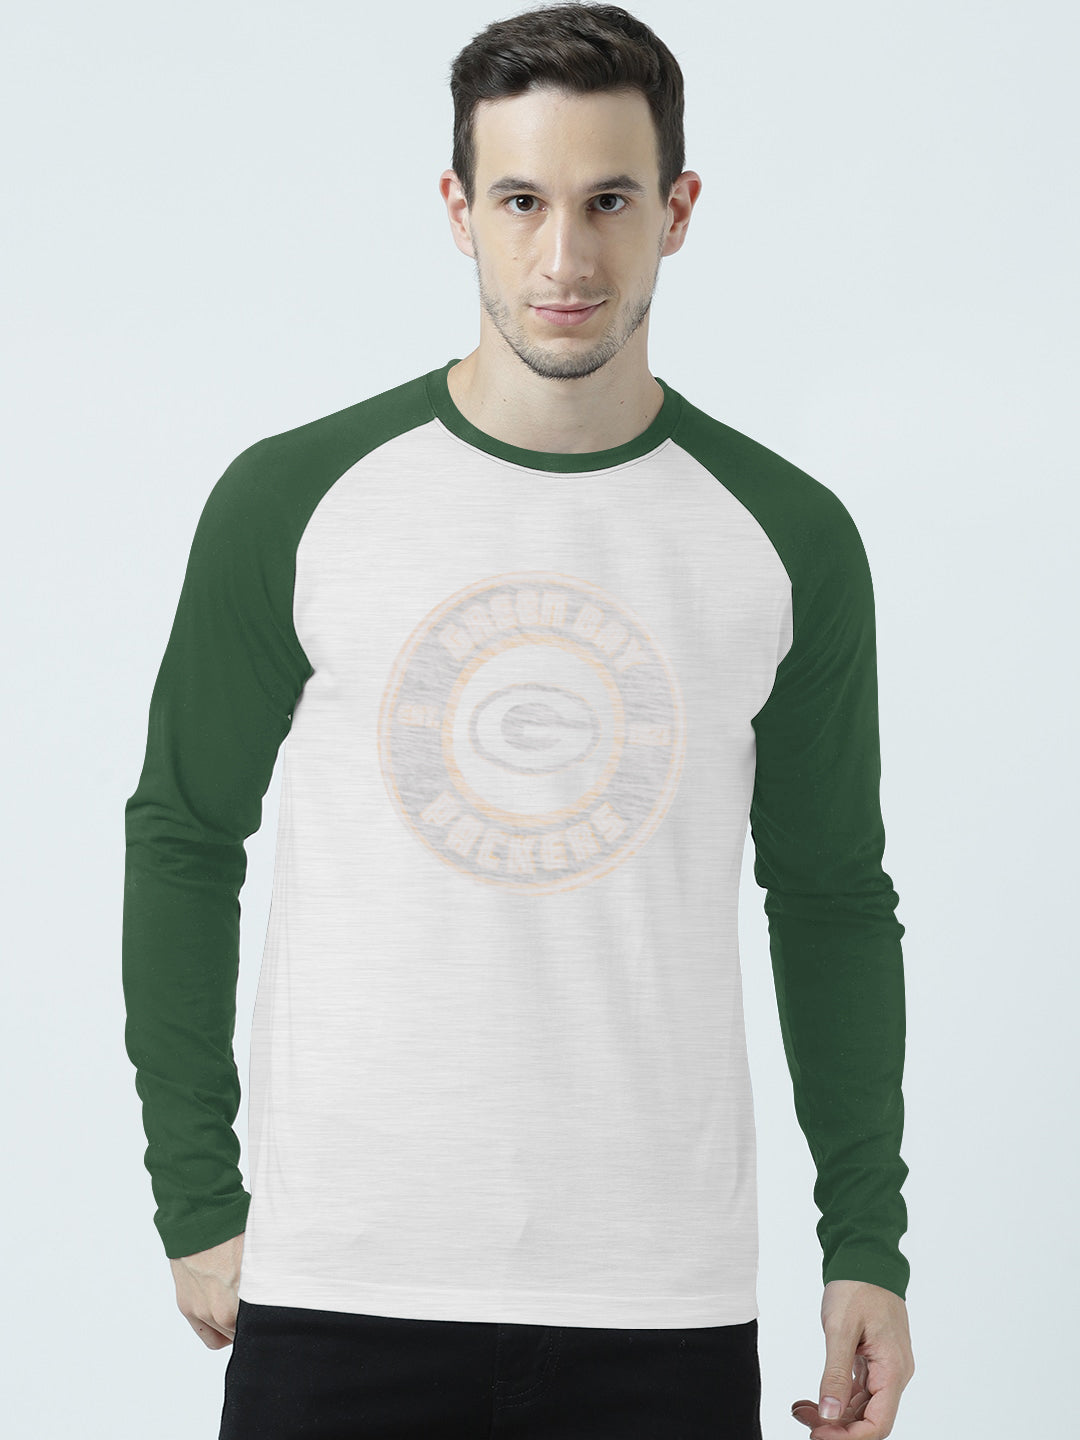 47 Raglan Sleeve Crew Neck Tee Shirt For Men-Off White Melange & Green with Print-SP2109